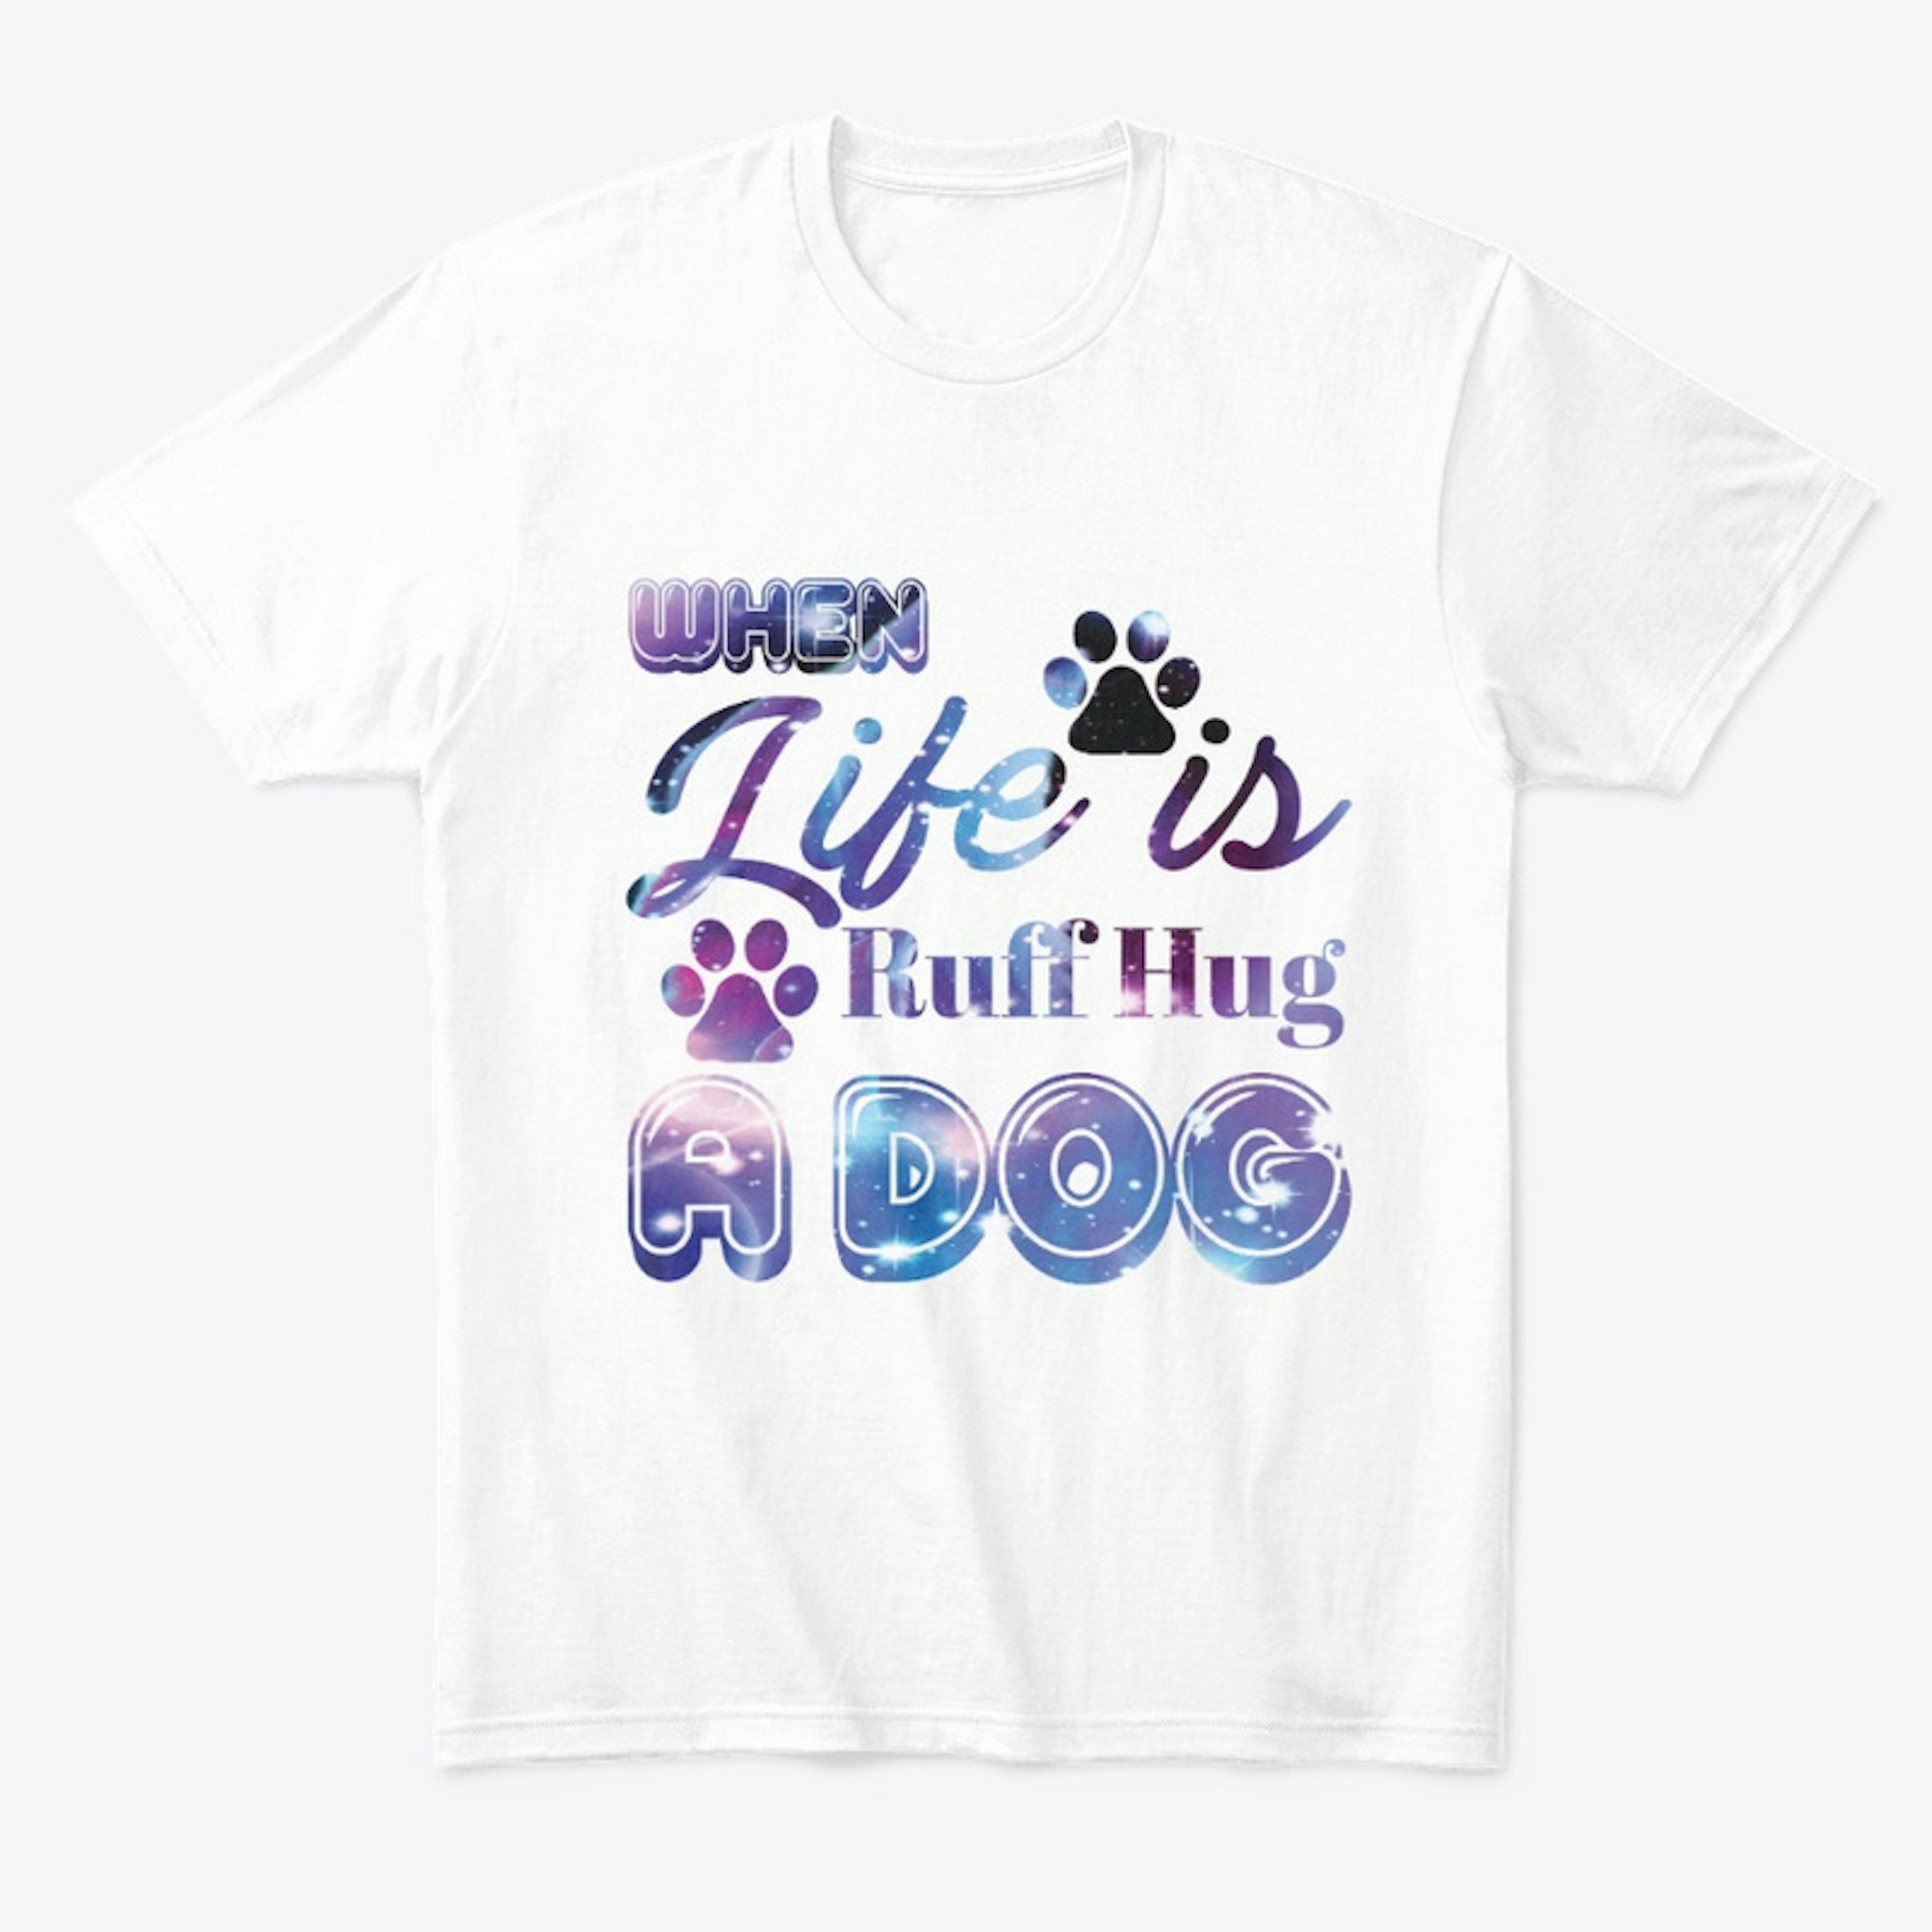 Sad dog t-shirt hug a Dog